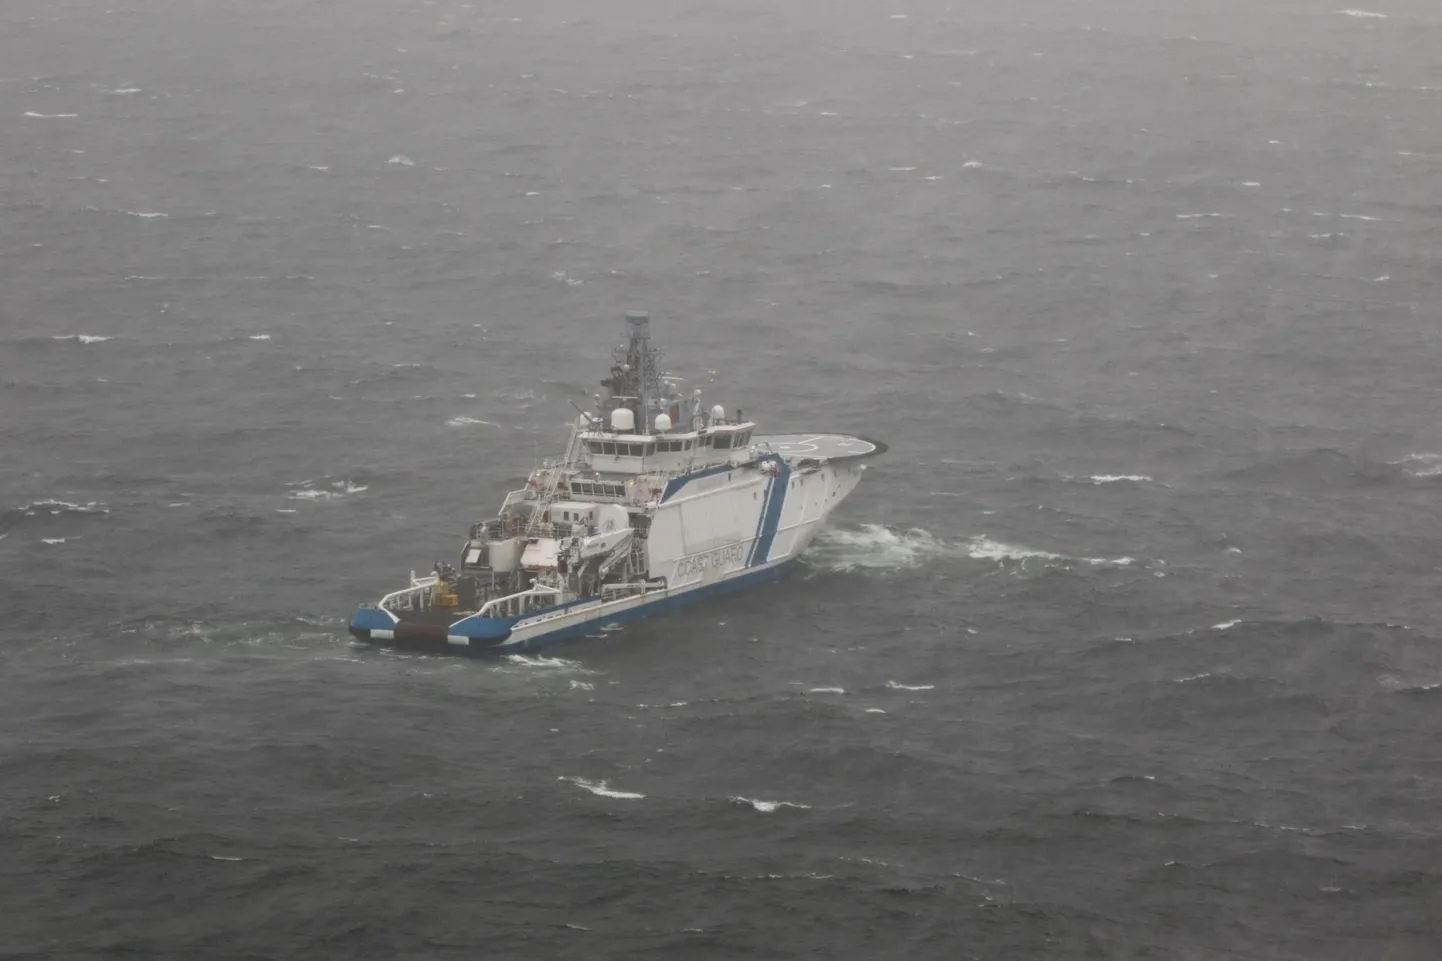 Soome piirivalve patrull-laev Balticconnetori katkise koha juures valvamas.